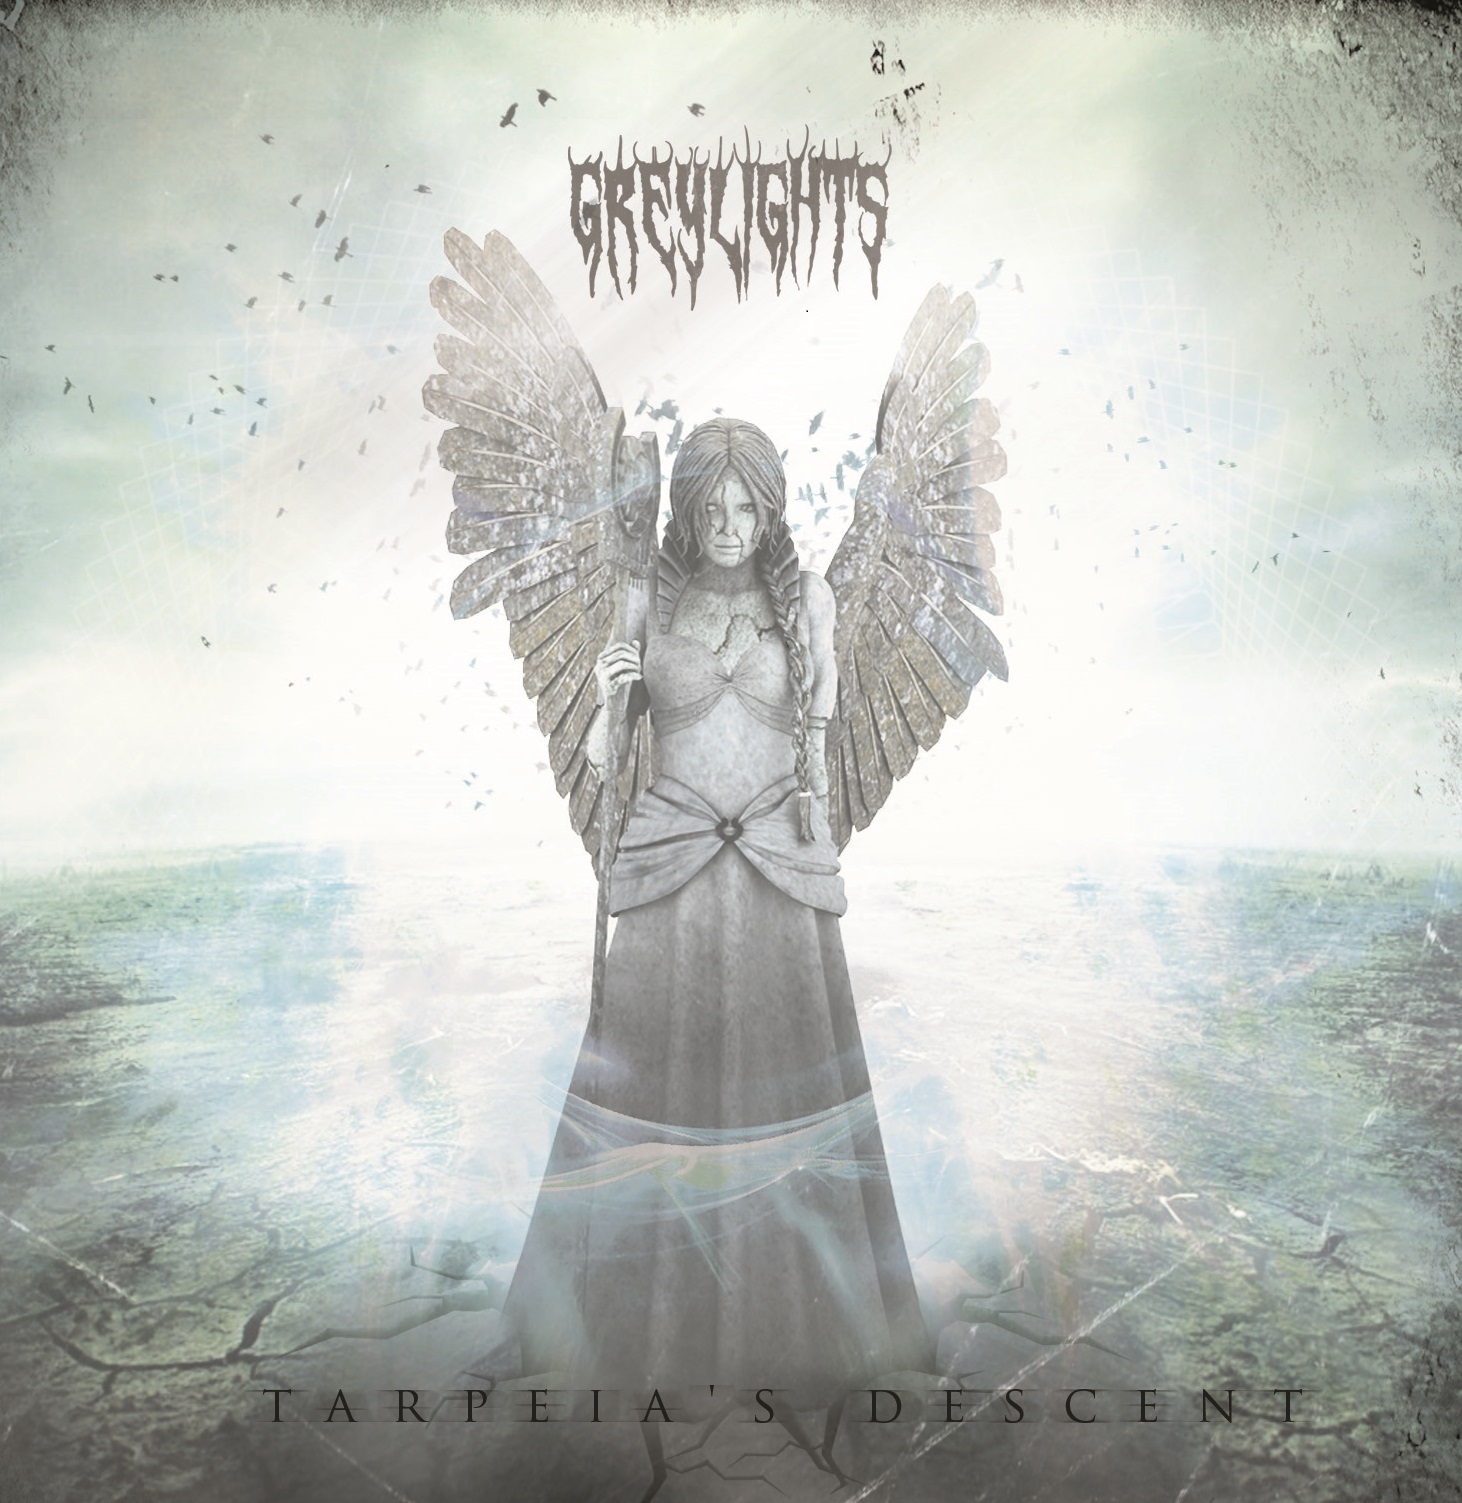 Greylights - Tarpeia's Descent [EP] (2014)